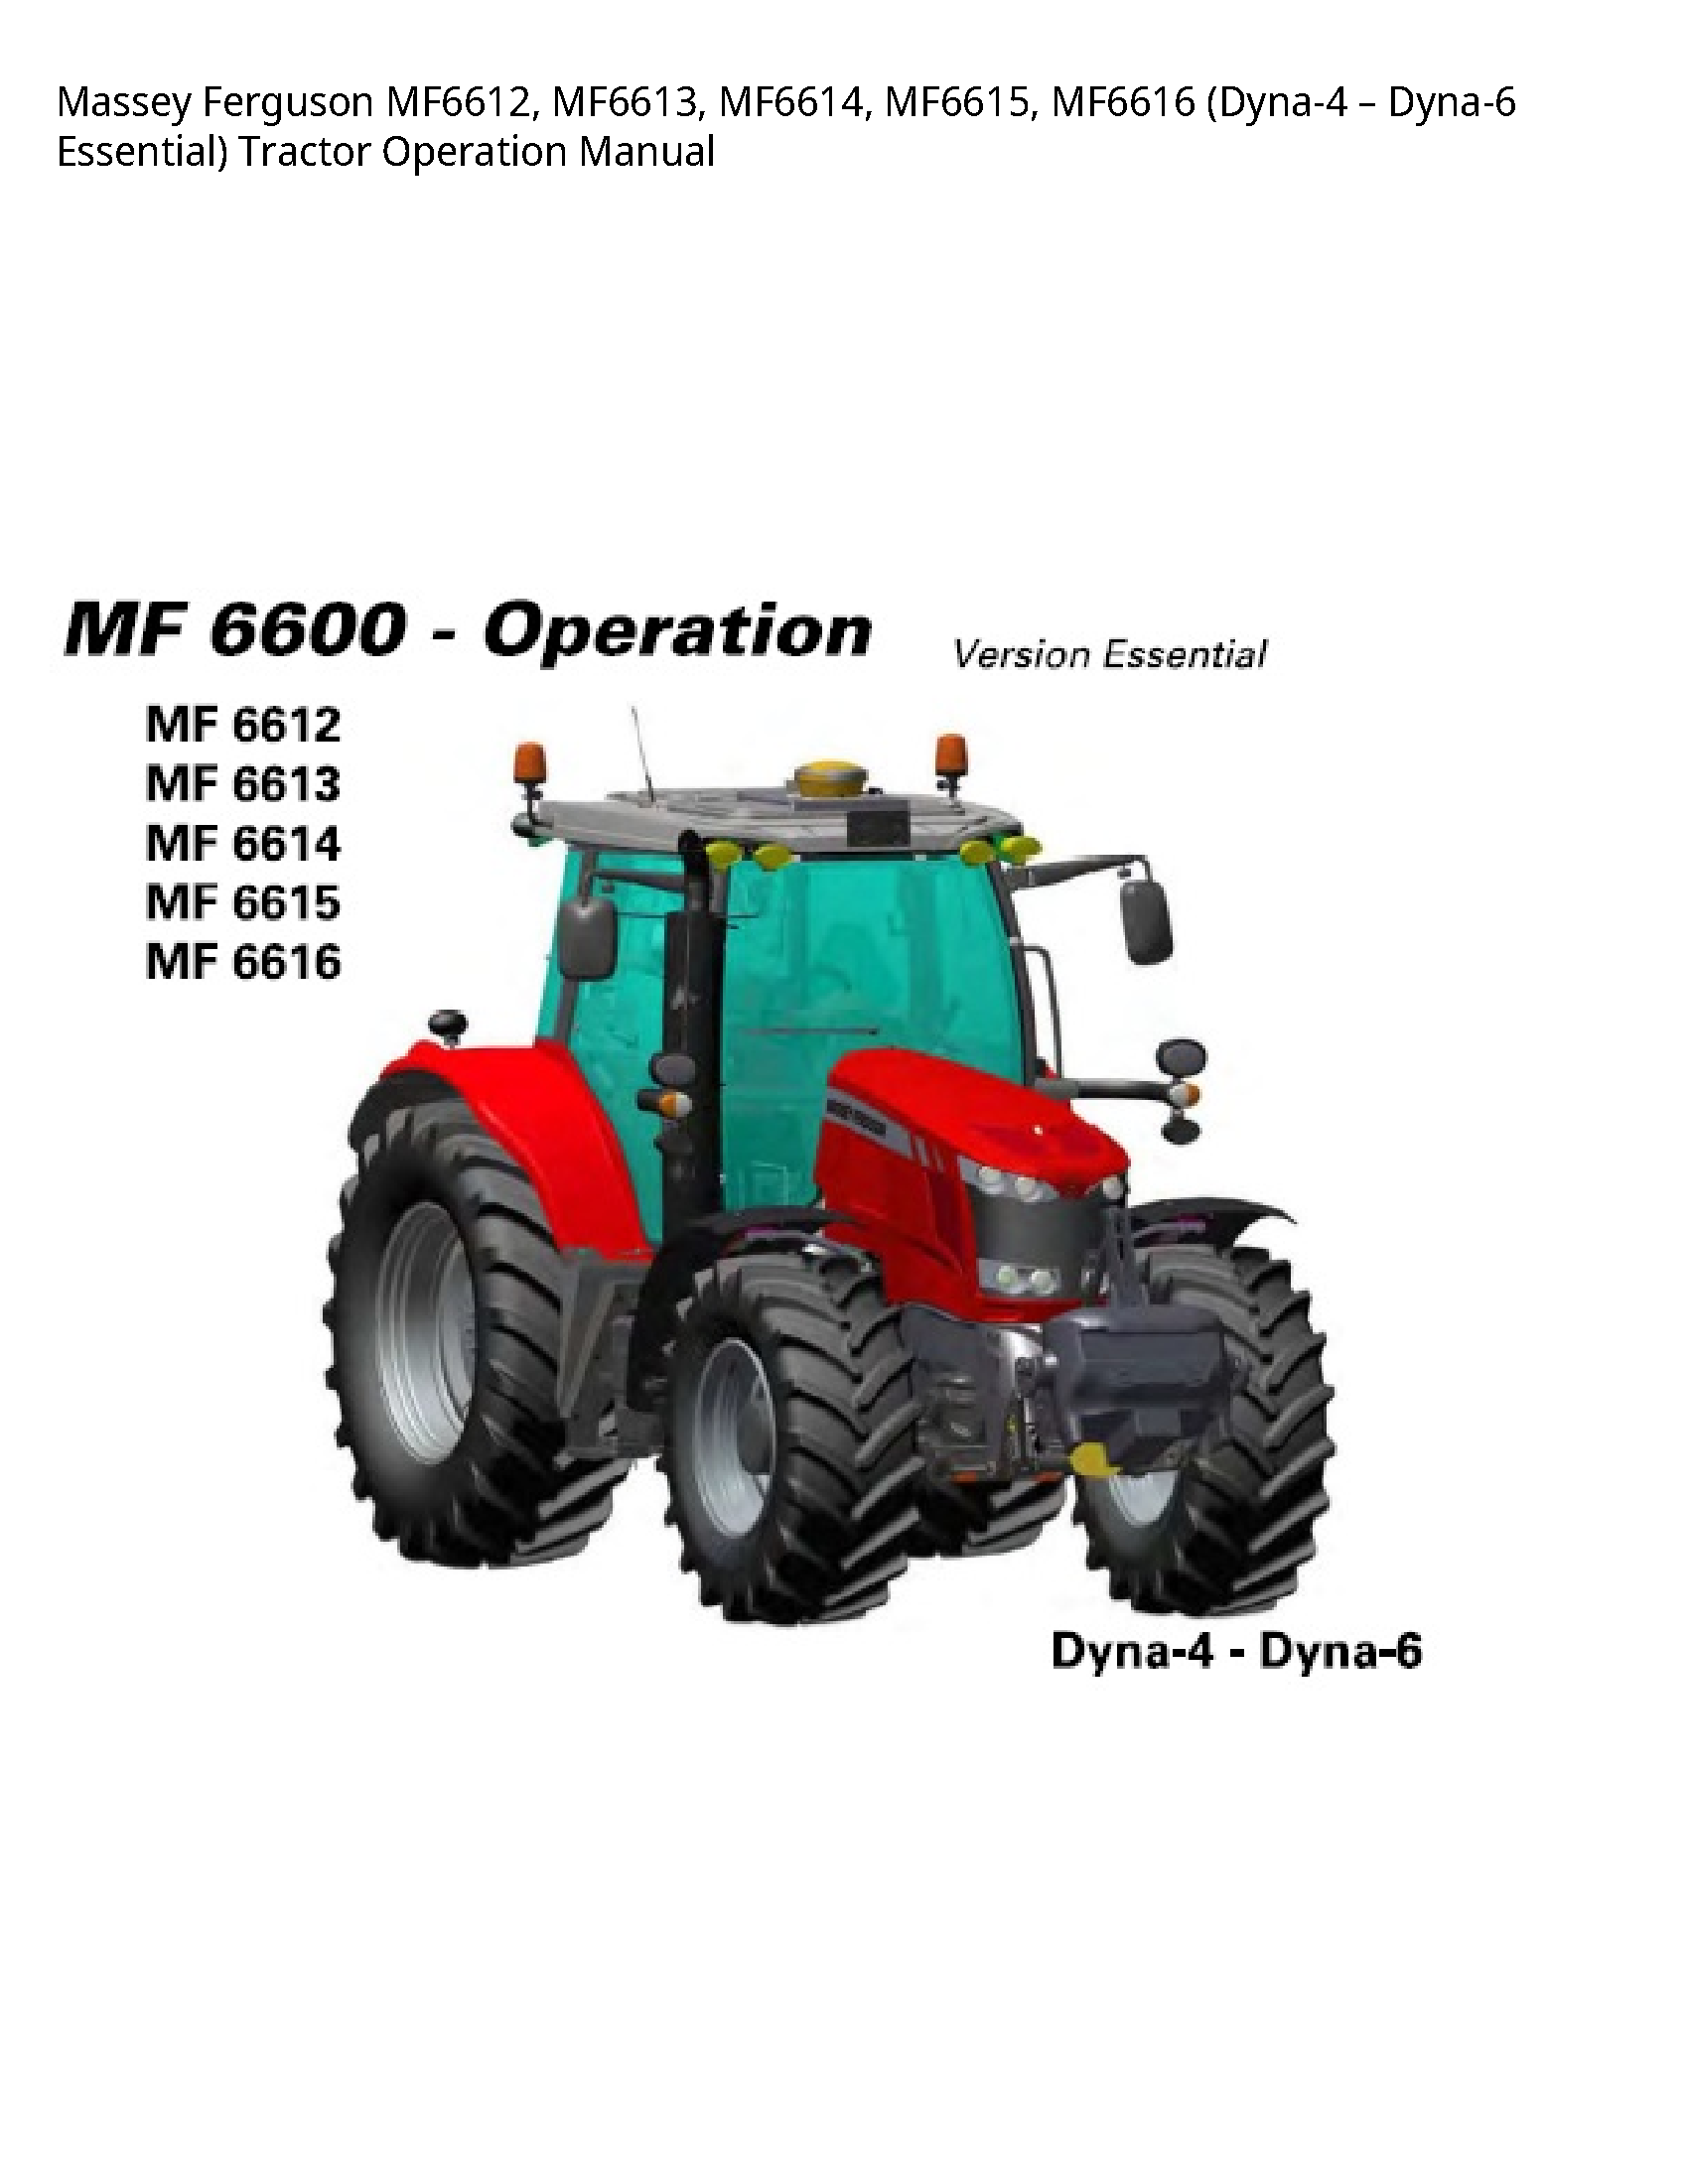 Massey Ferguson MF6612 Essential) Tractor Operation manual